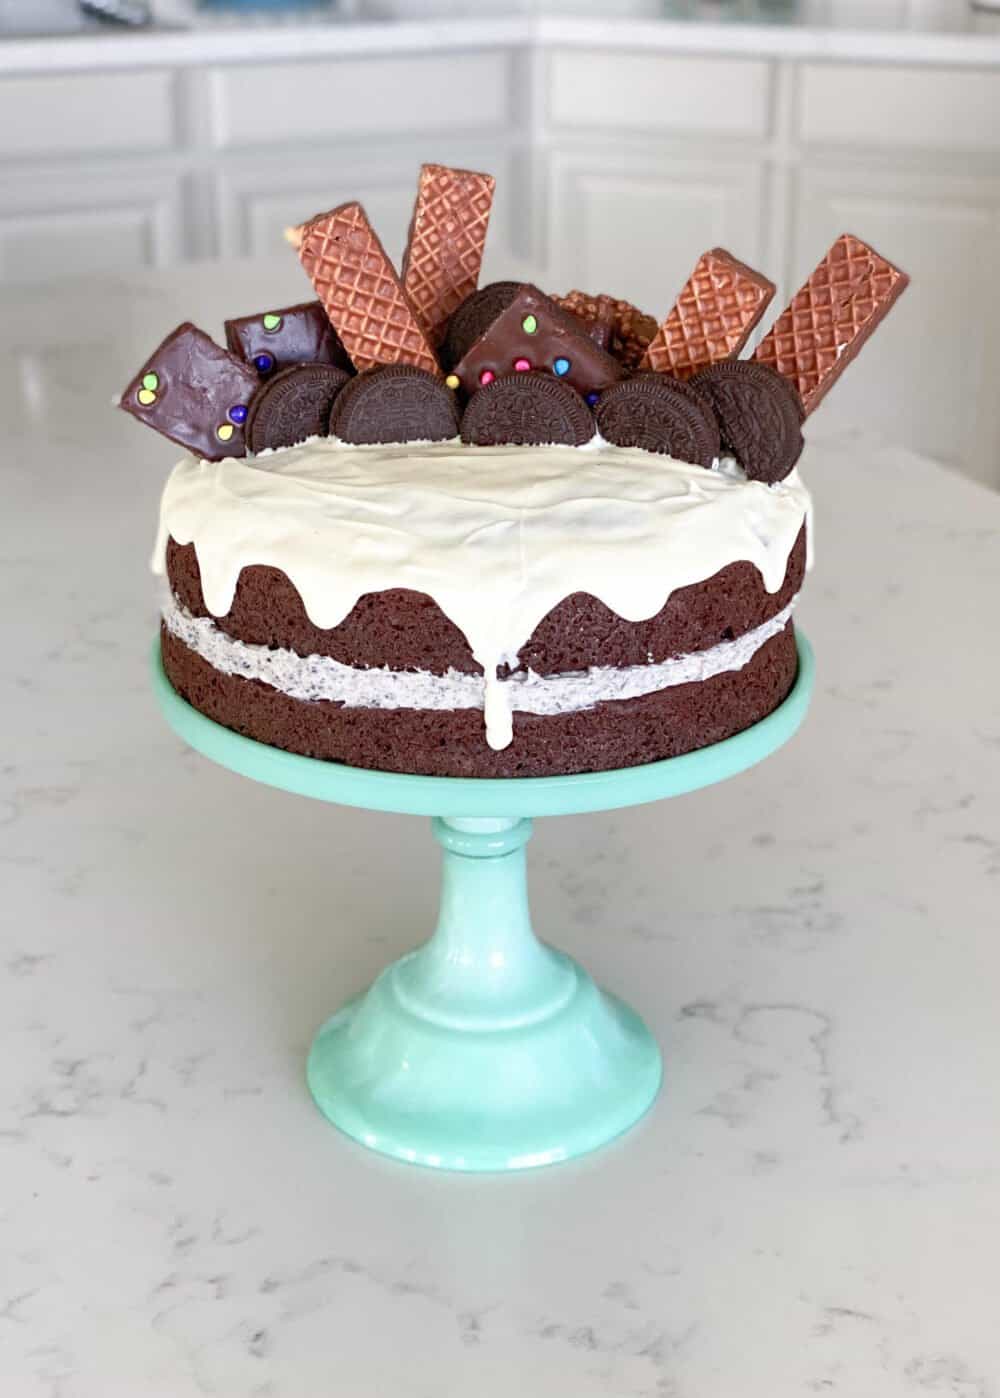 A Very Happy Birthday Cake Recipe